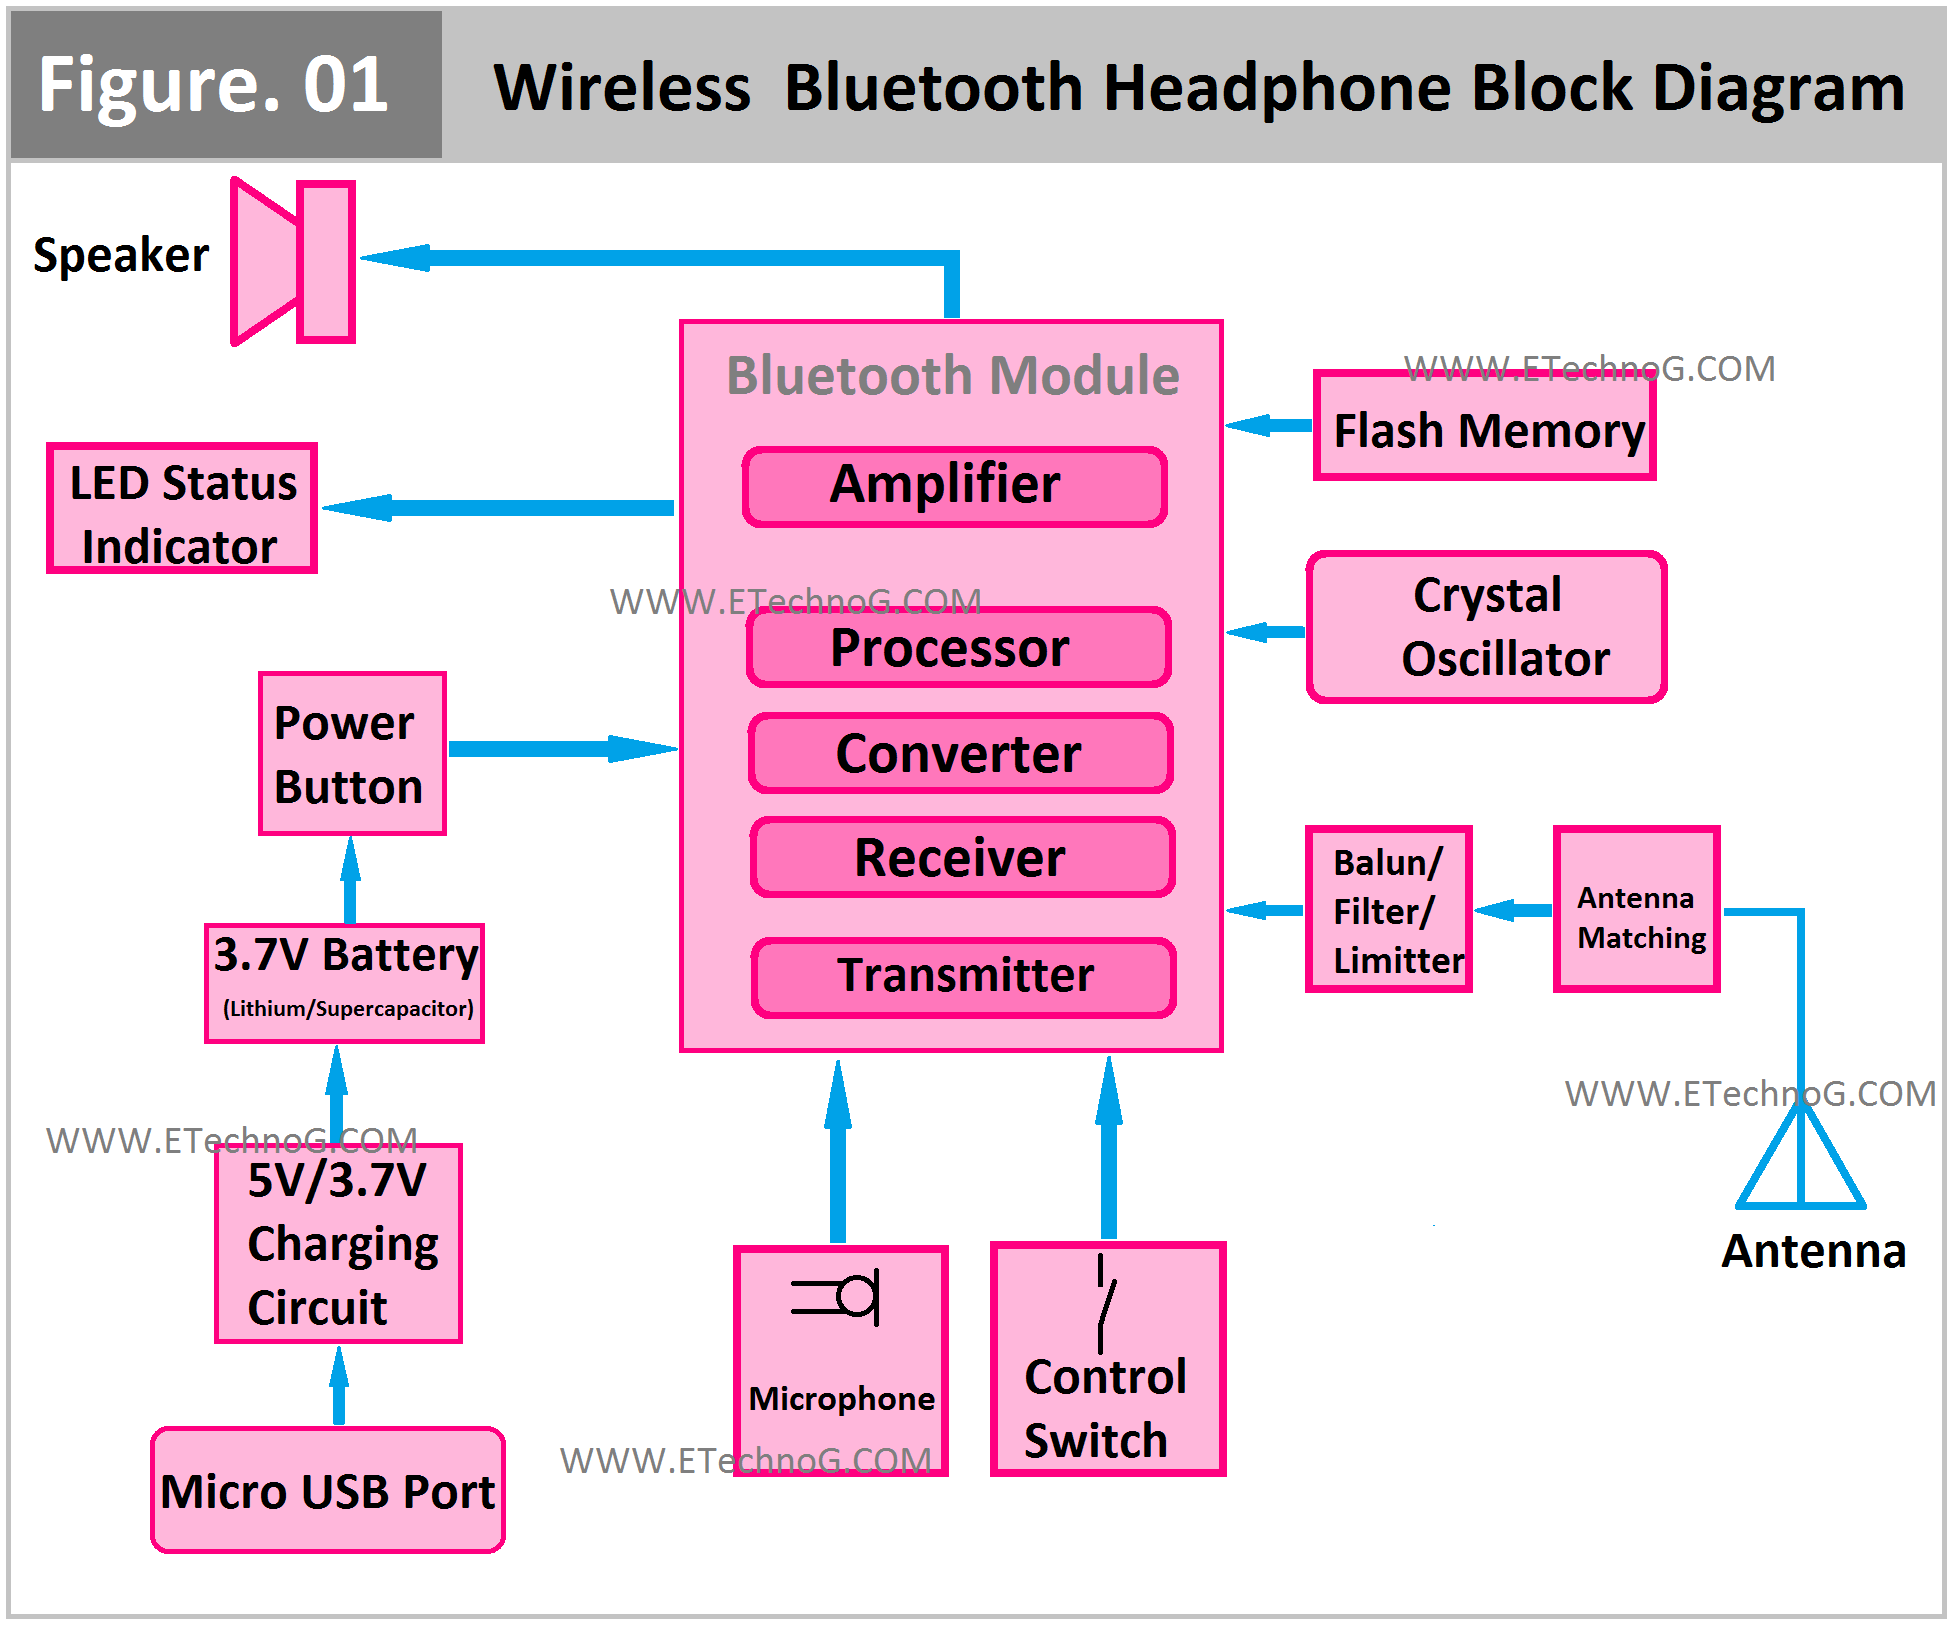 Wireless Bluetooth Headphone Block Diagram